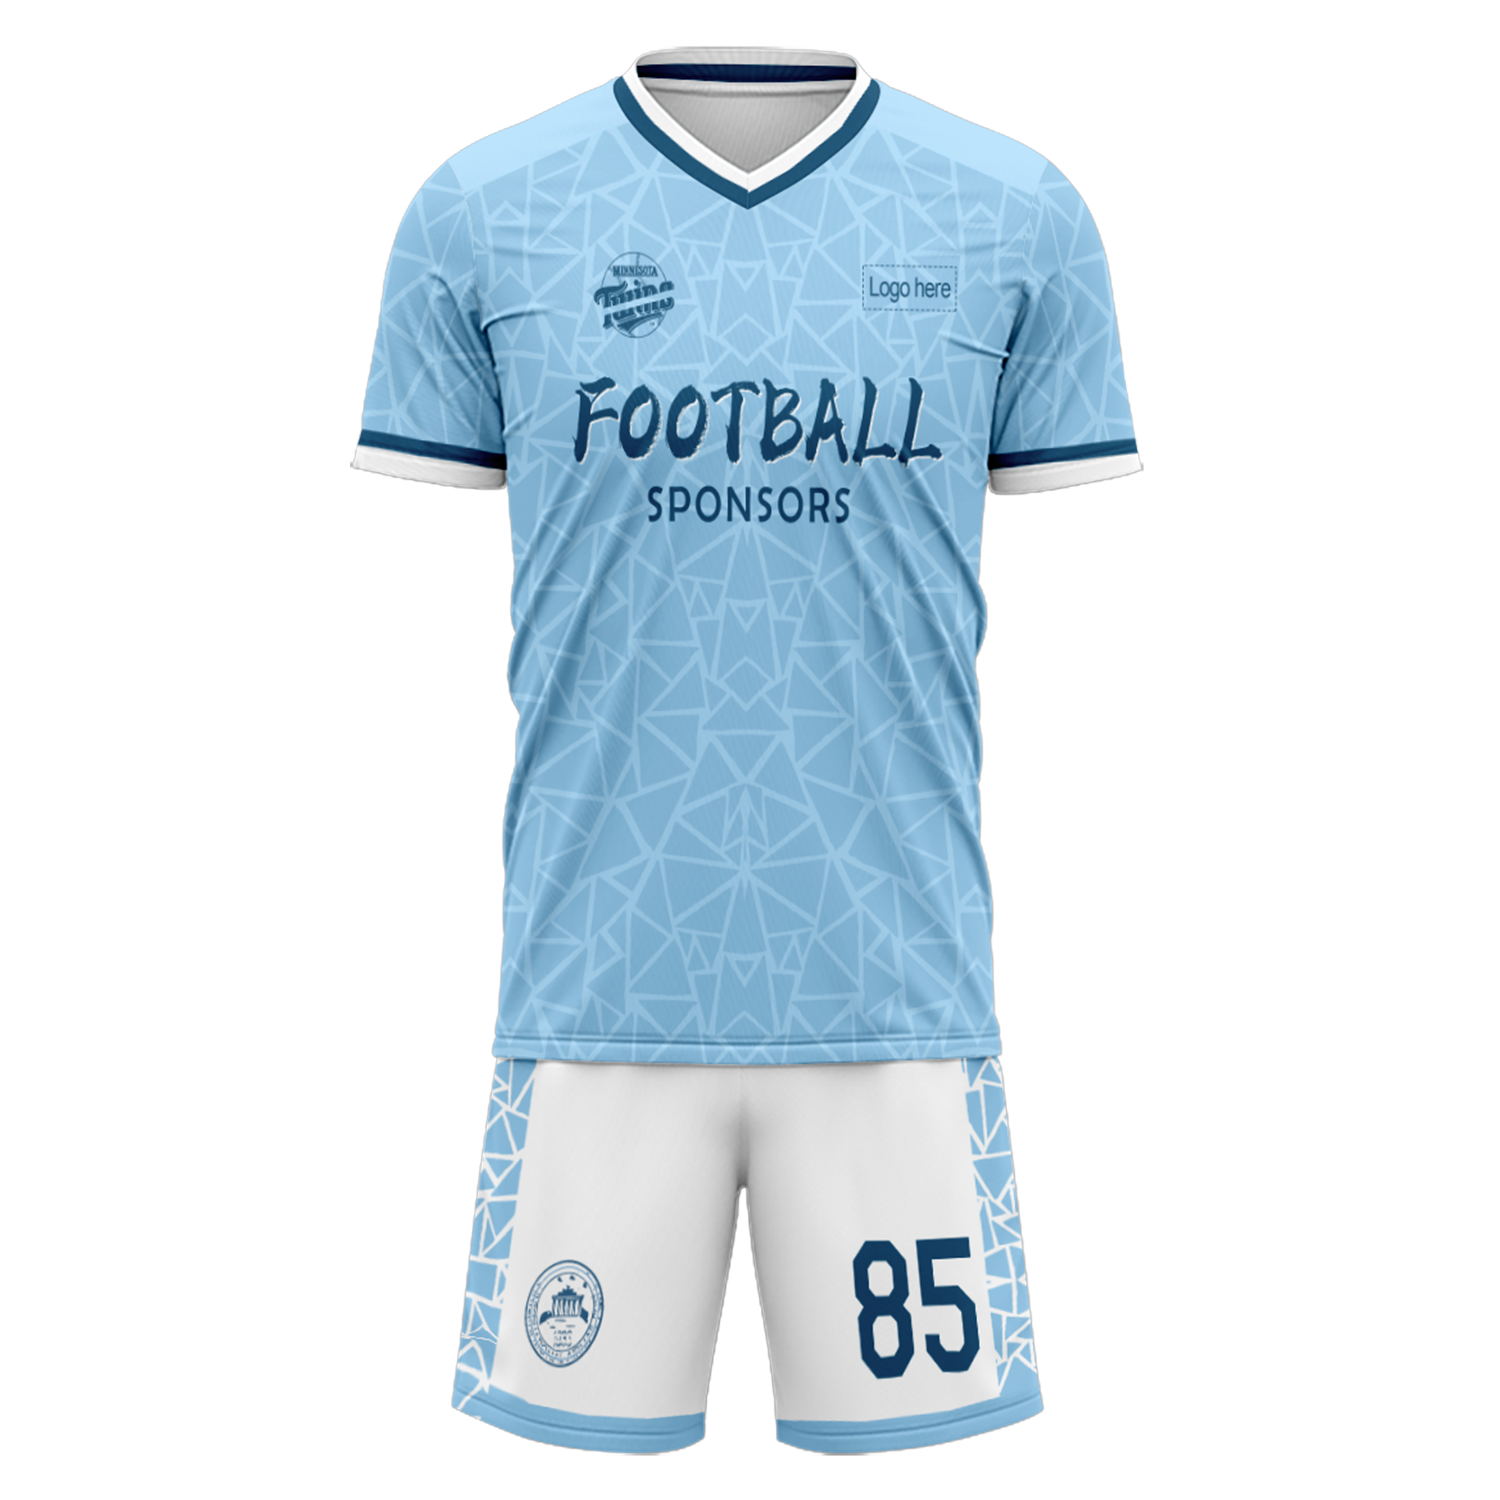 Custom England Team Football Suits Personalized Design Print on Demand UK Soccer Jerseys